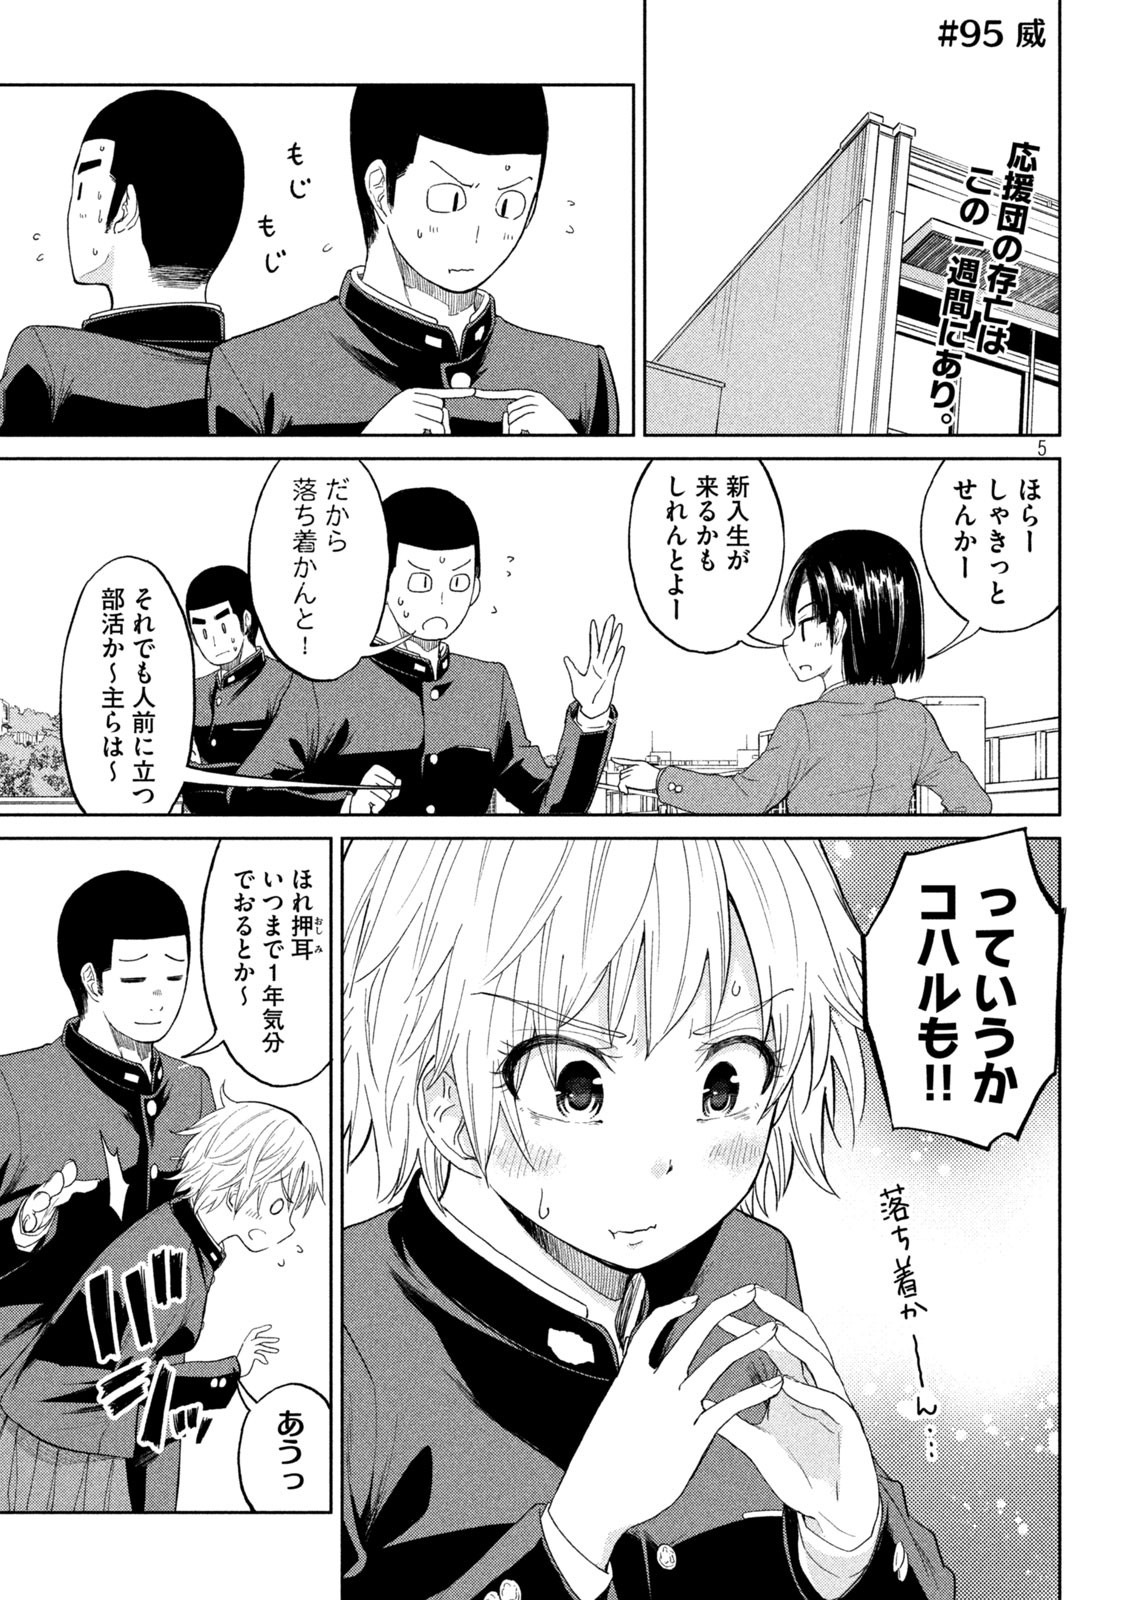 Koharu haru! - Chapter 95 - Page 1